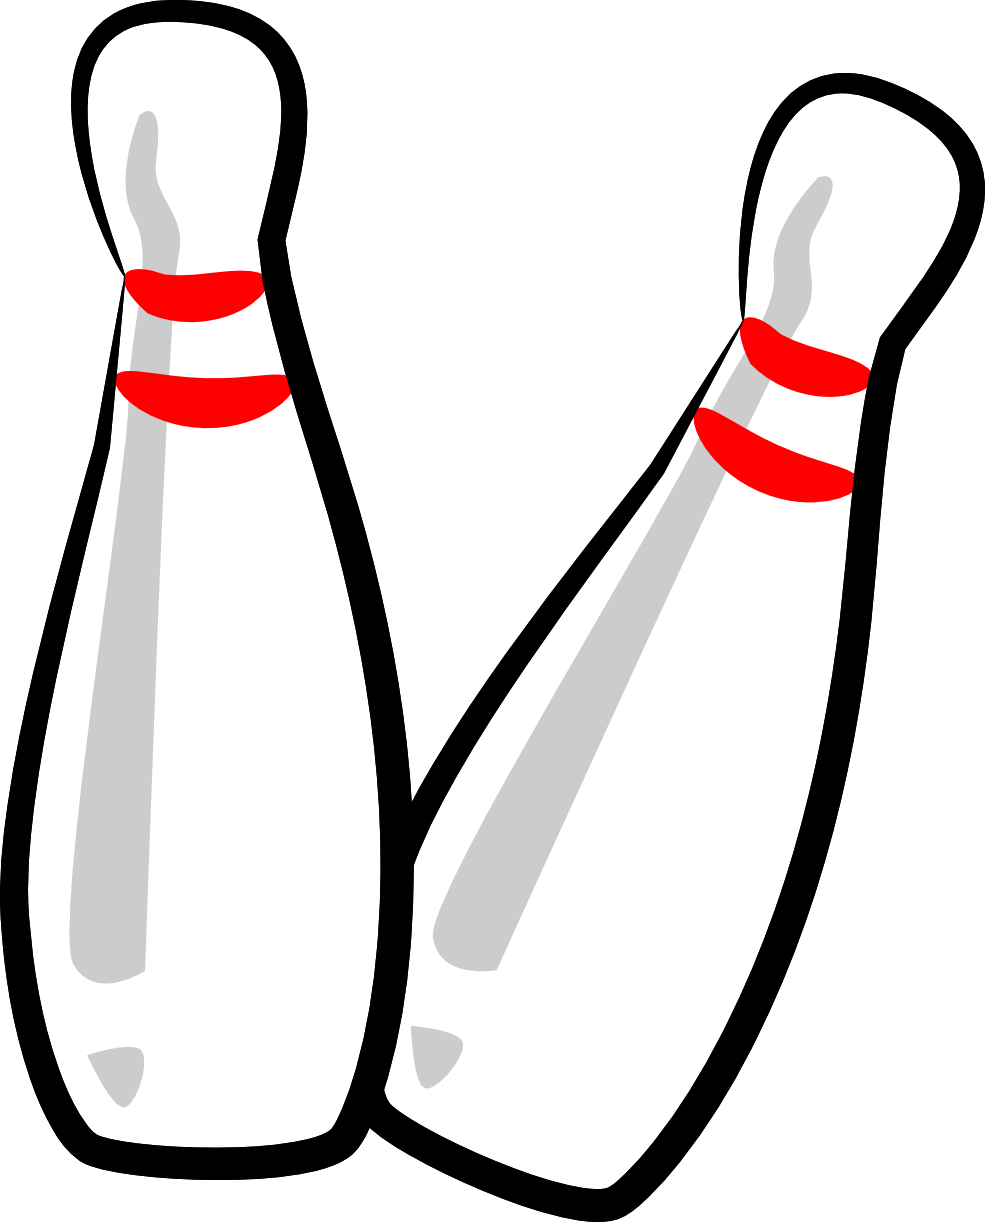 Retro bowling pin clipart - ClipartFox